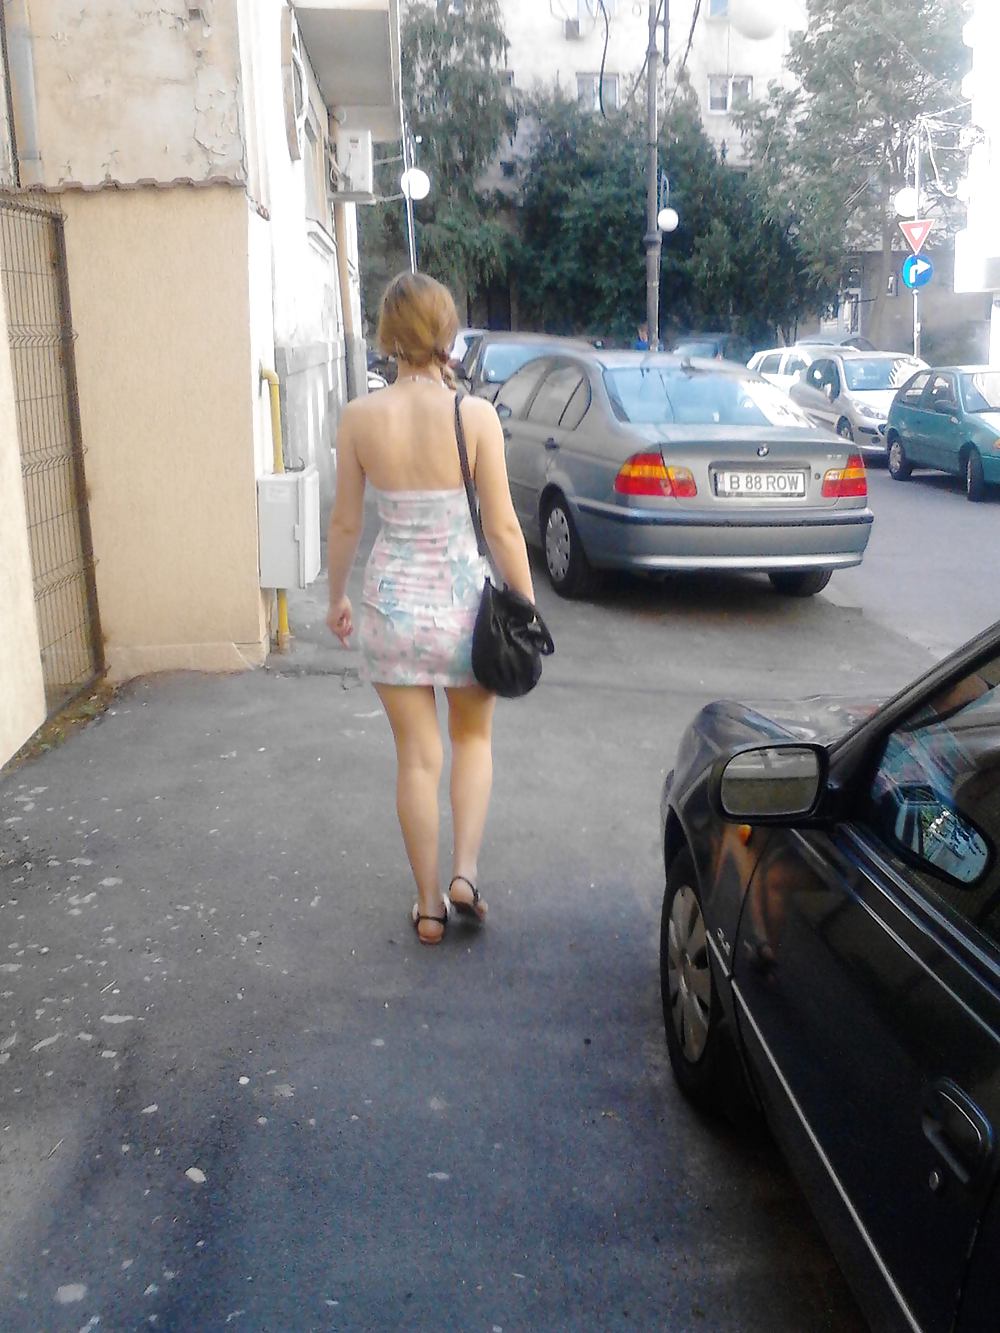 Spy hot girl feet skirt street romanian #25758324